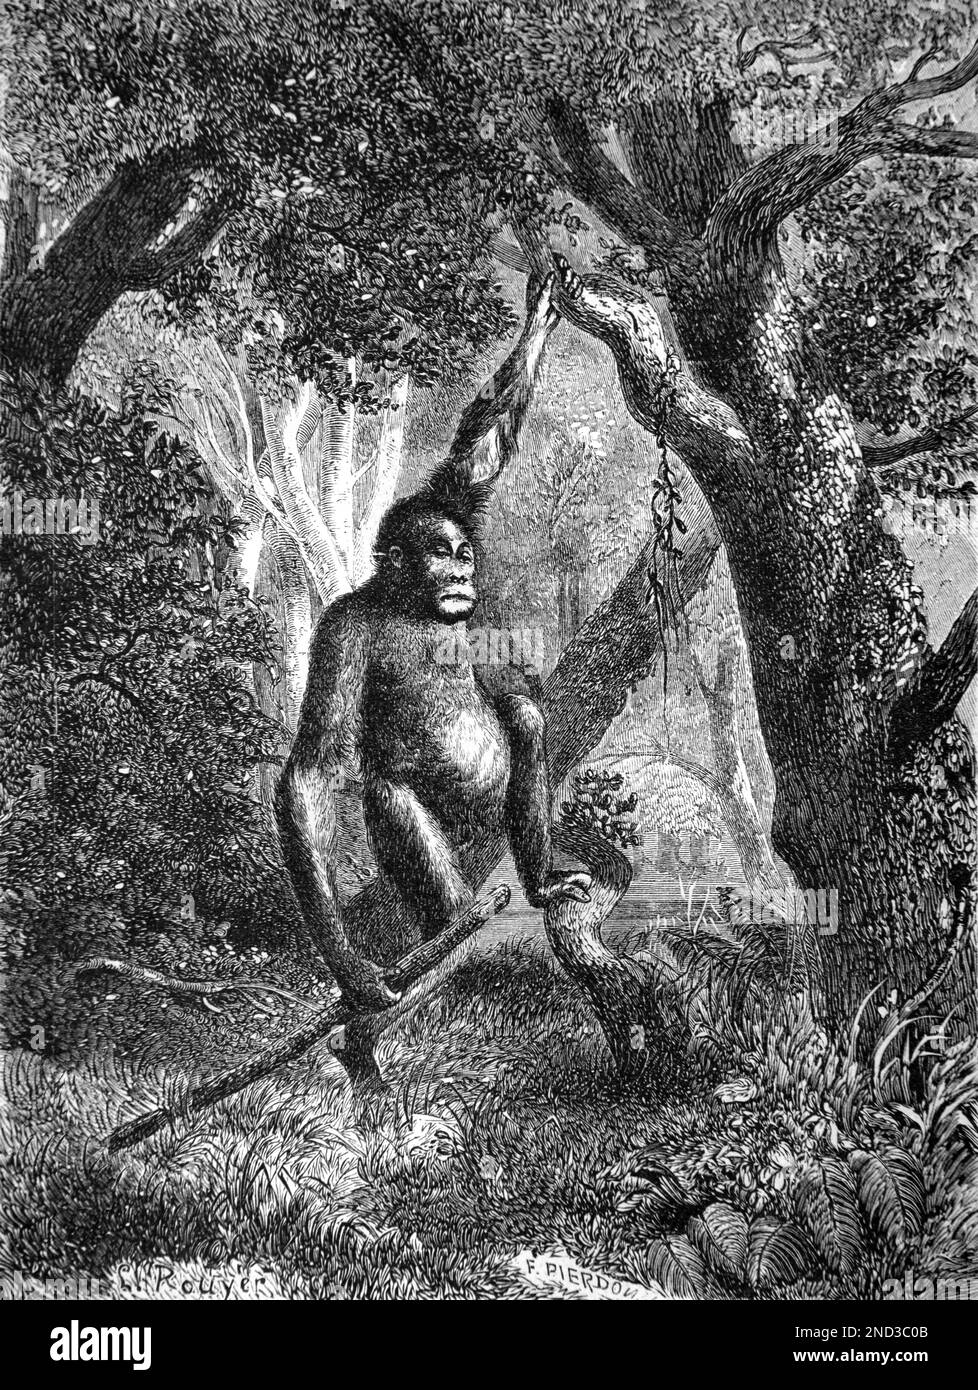 Portrait of Young Orangutan, Pongo pygmaeus, posing in Tropical Rain Forest in Borneo or Sumatra. Vintage Engraving or Illustration 1862 Stock Photo